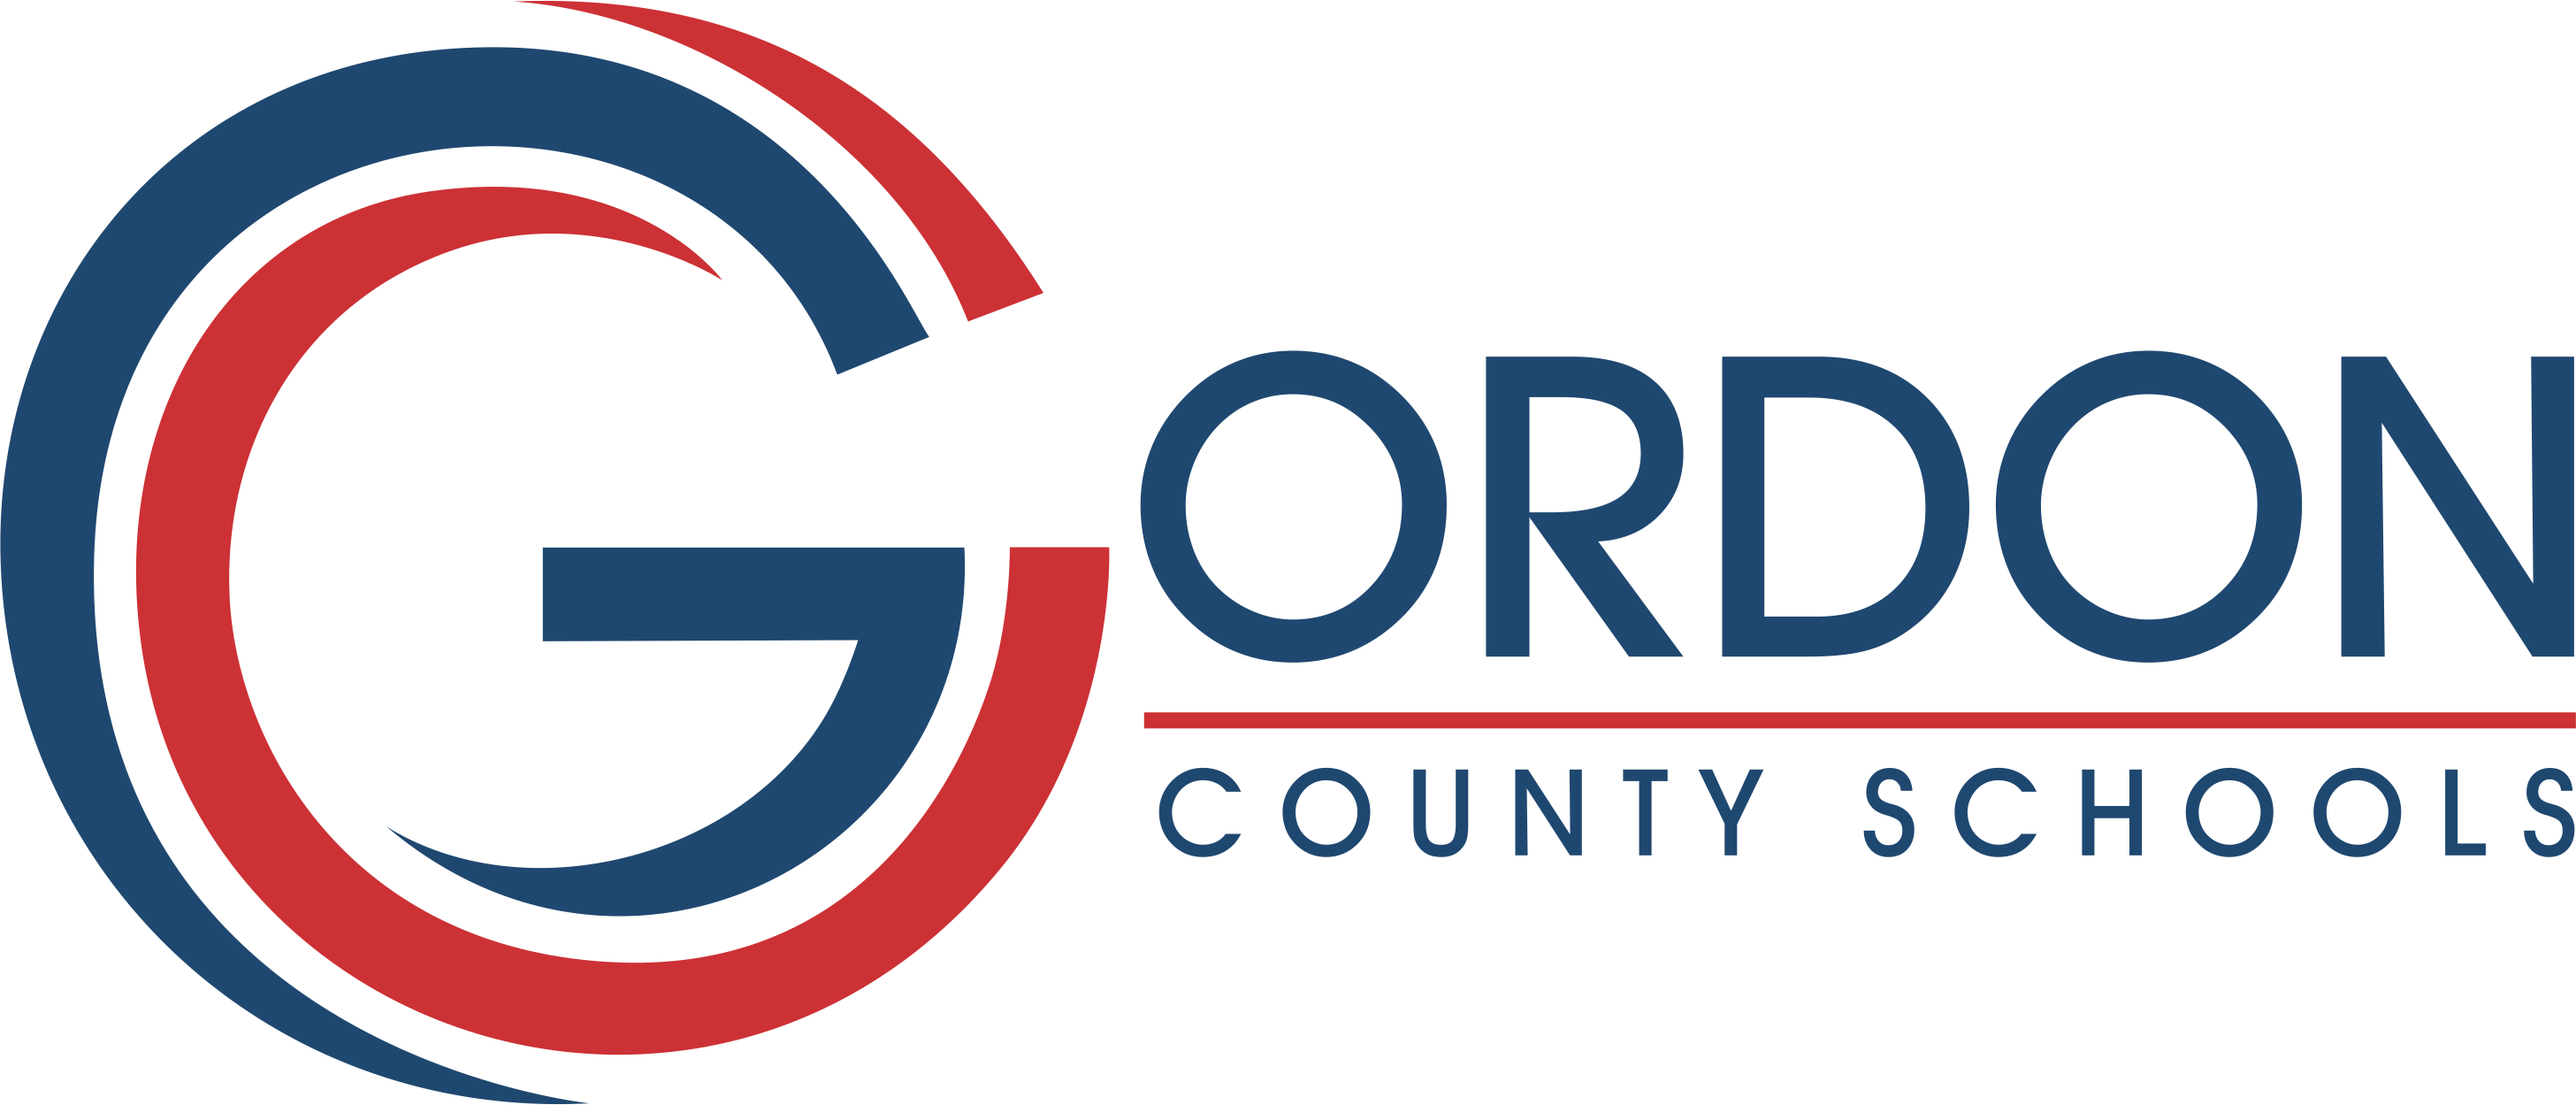 Academic Calendars | Gordon County Schools